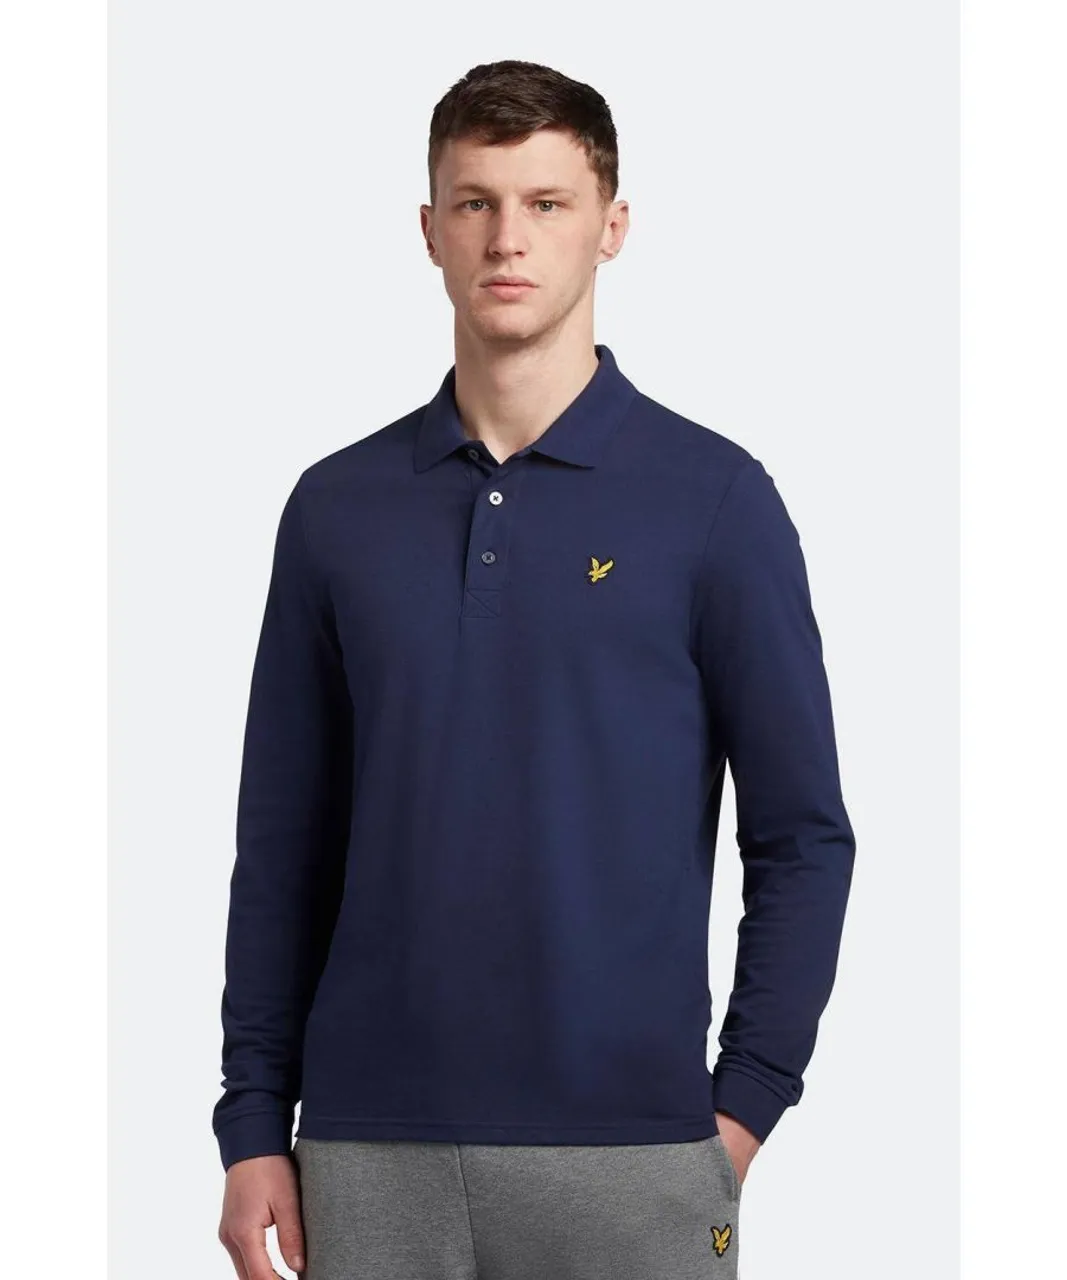 Lyle & Scott Mens Long Sleeve Polo Shirt in Navy - Marine Cotton